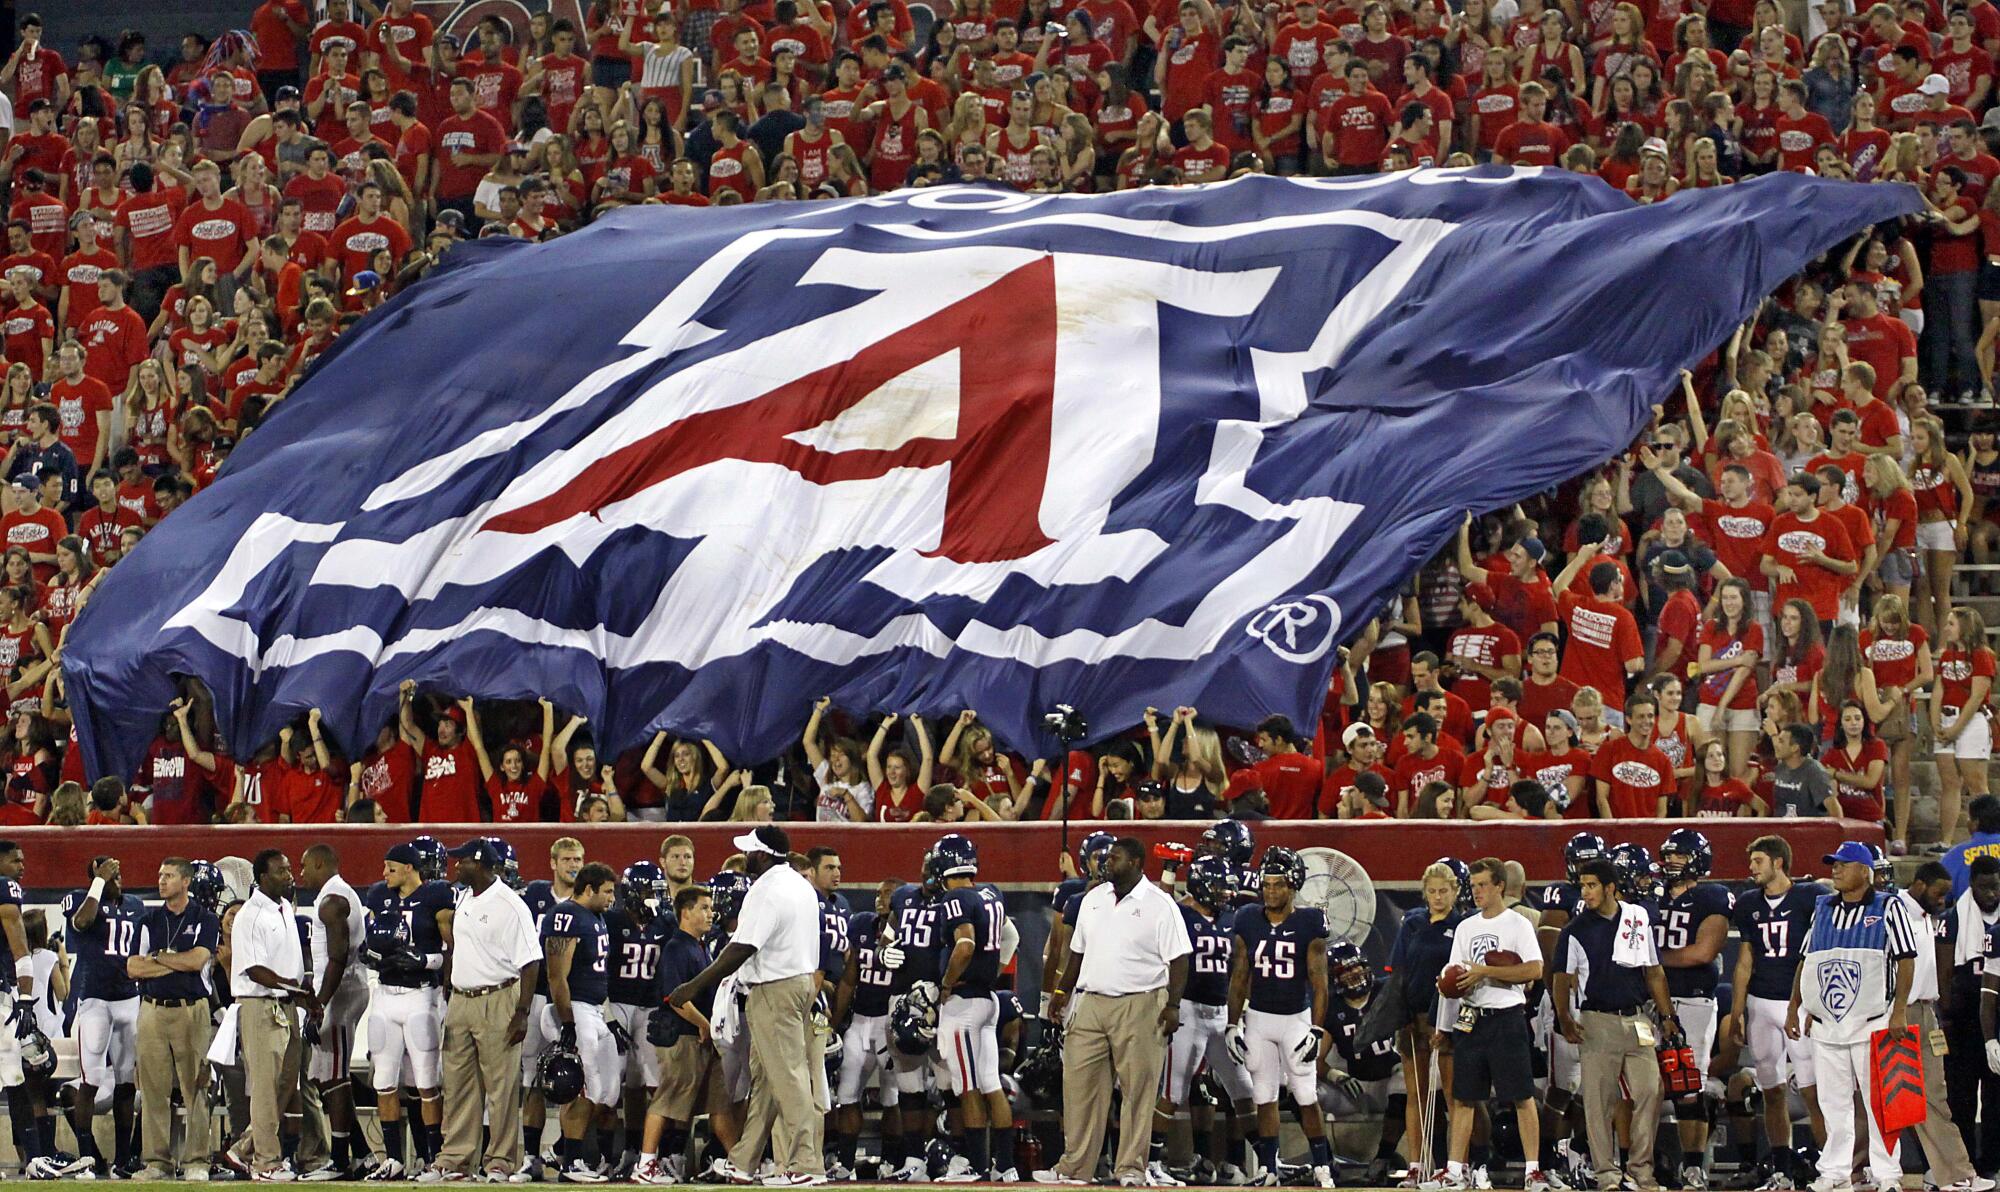 Fans cheer on the Arizona football team with a Arizona flag.